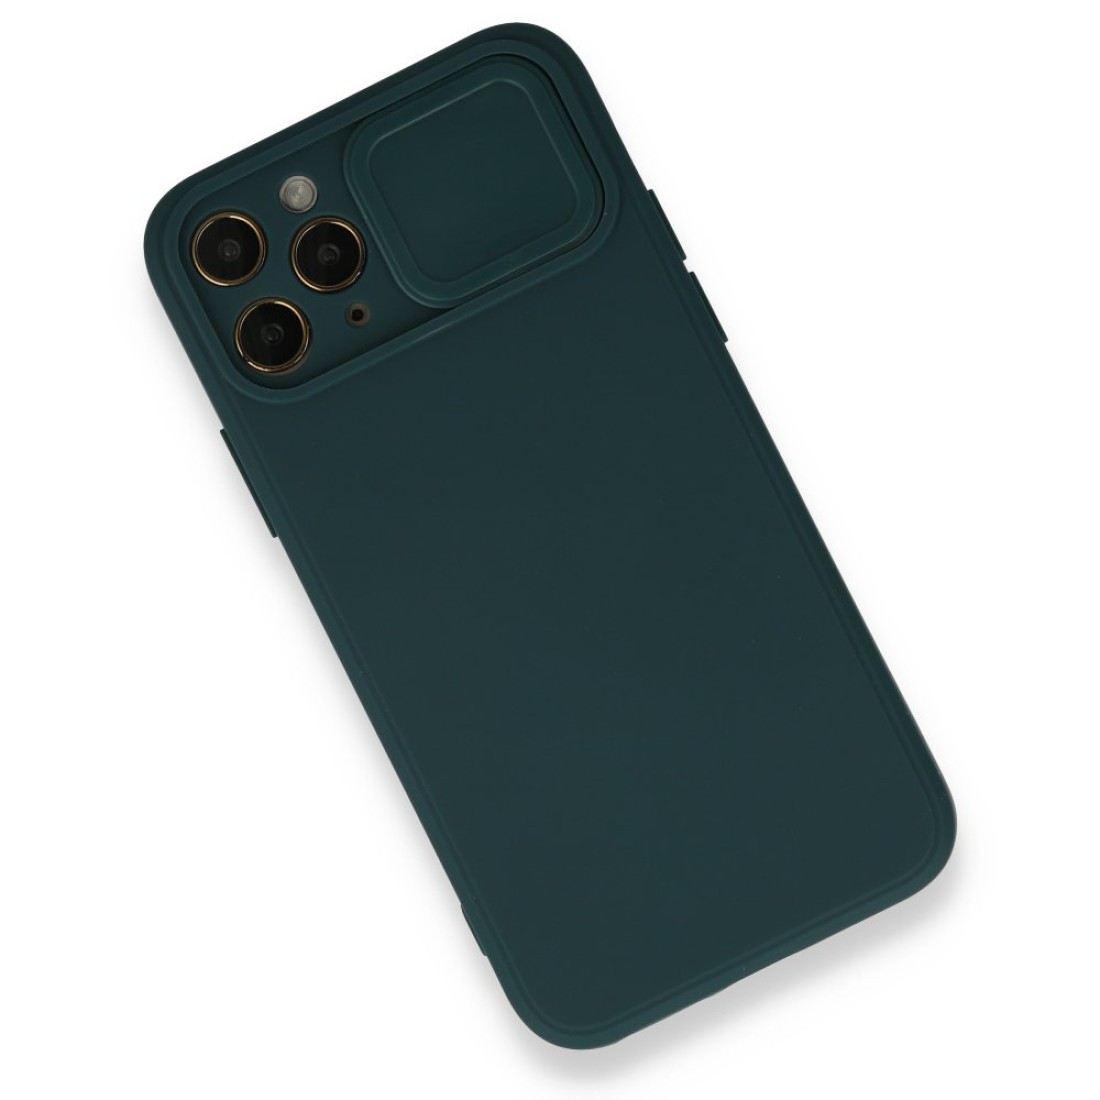 Apple iPhone 11 Pro Max Kılıf Color Lens Silikon - Yeşil